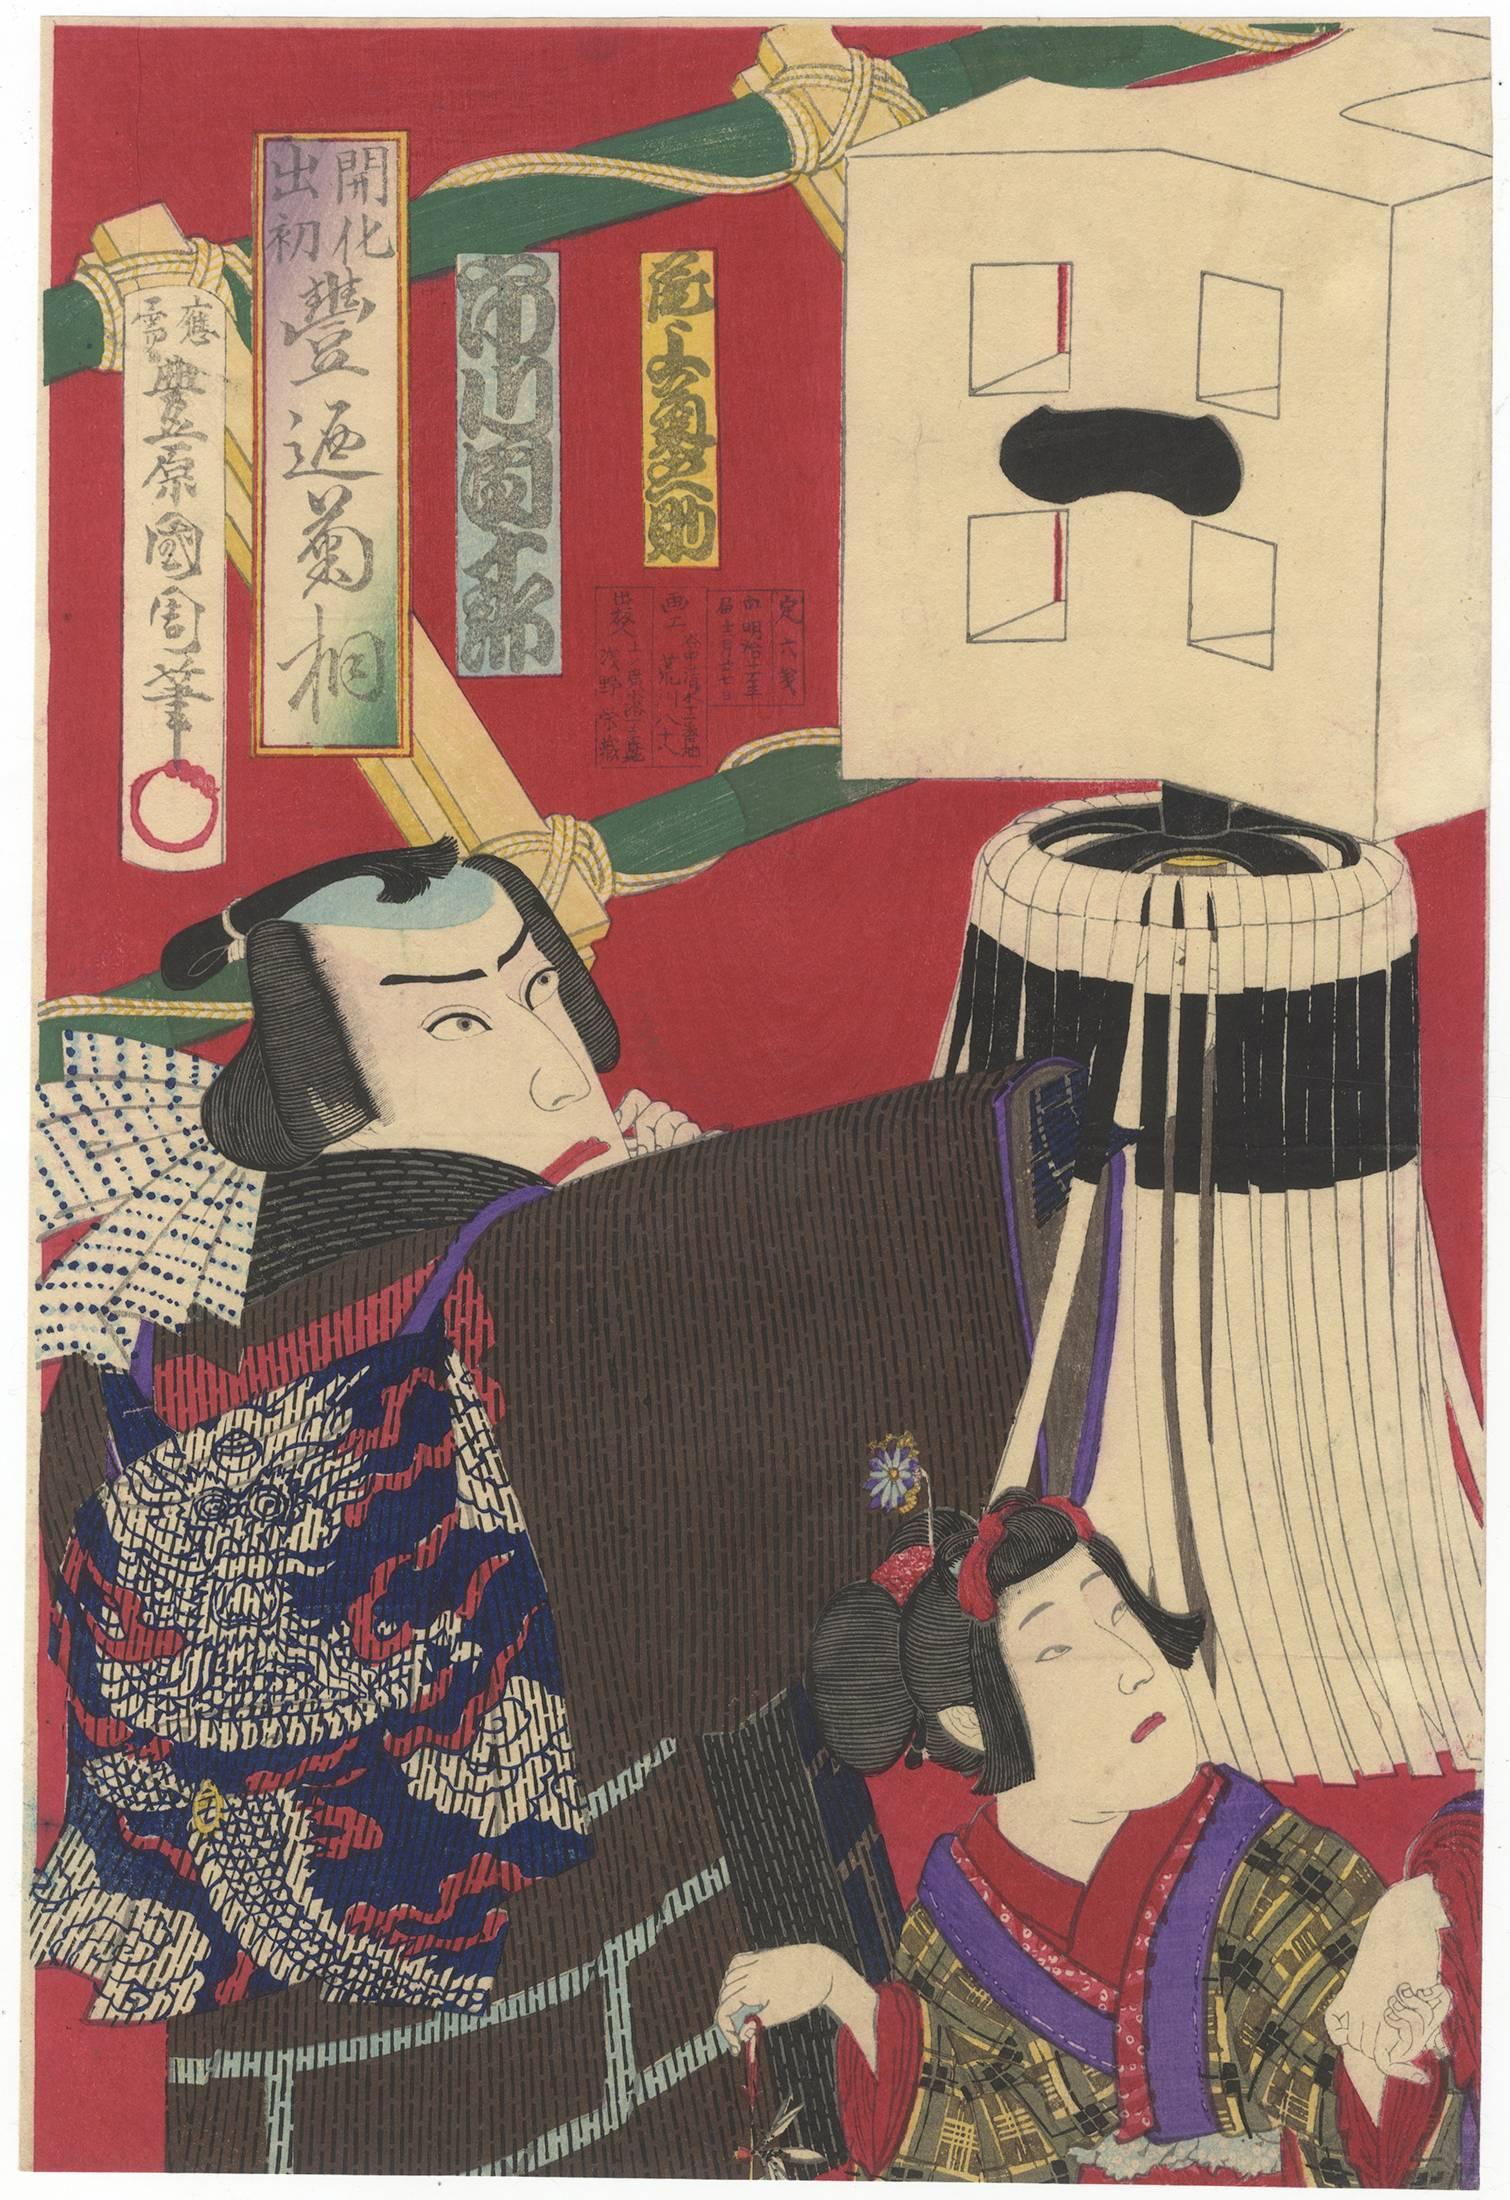 Artist: Toyohara Kunichika (1835-1900)
Title: The Firemen's Dezomeshiki (New Year's Parade) Played by Kabuki Actors. Triptych. 
Publisher: Asano Eizo
Date: 1878
Size: (R) 24.6 x 35.9 (C) 24.1 x 35.7 (L) 24 x 35.5 cm

Kunichika Toyohara